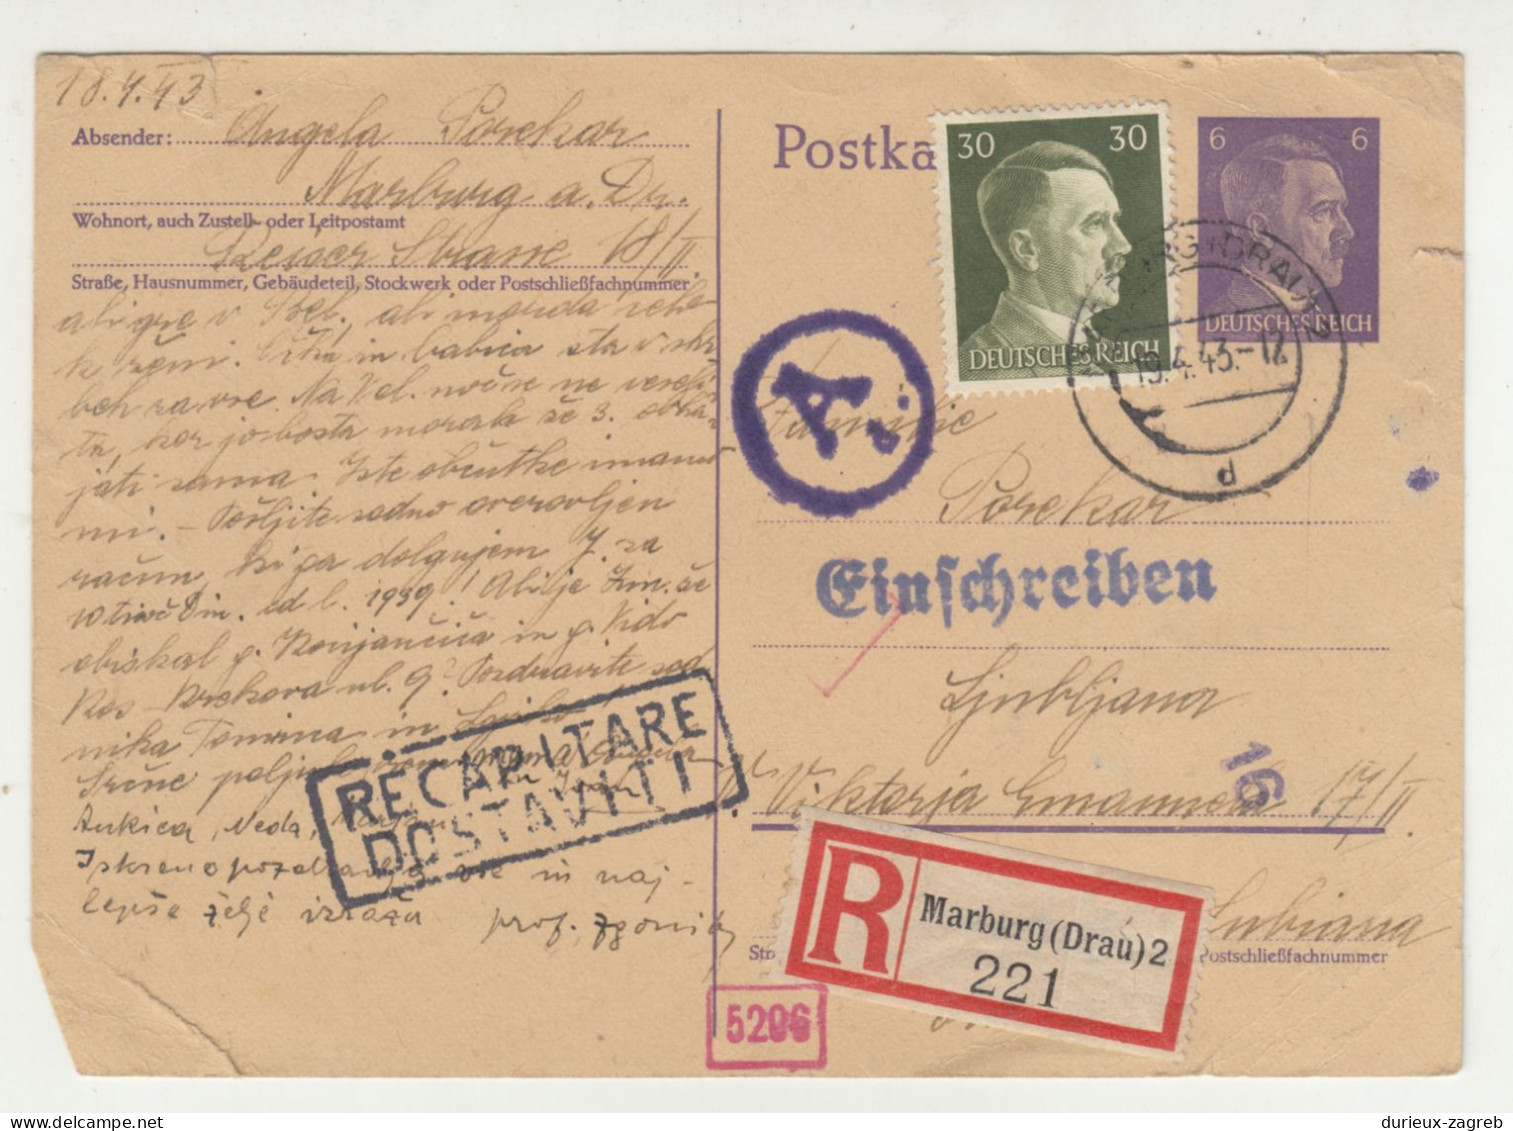 Germany Reich Postal Stationery Postcard Posted Registered 1943 Marburg A/D To Ljubljana B240503 - Slowenien